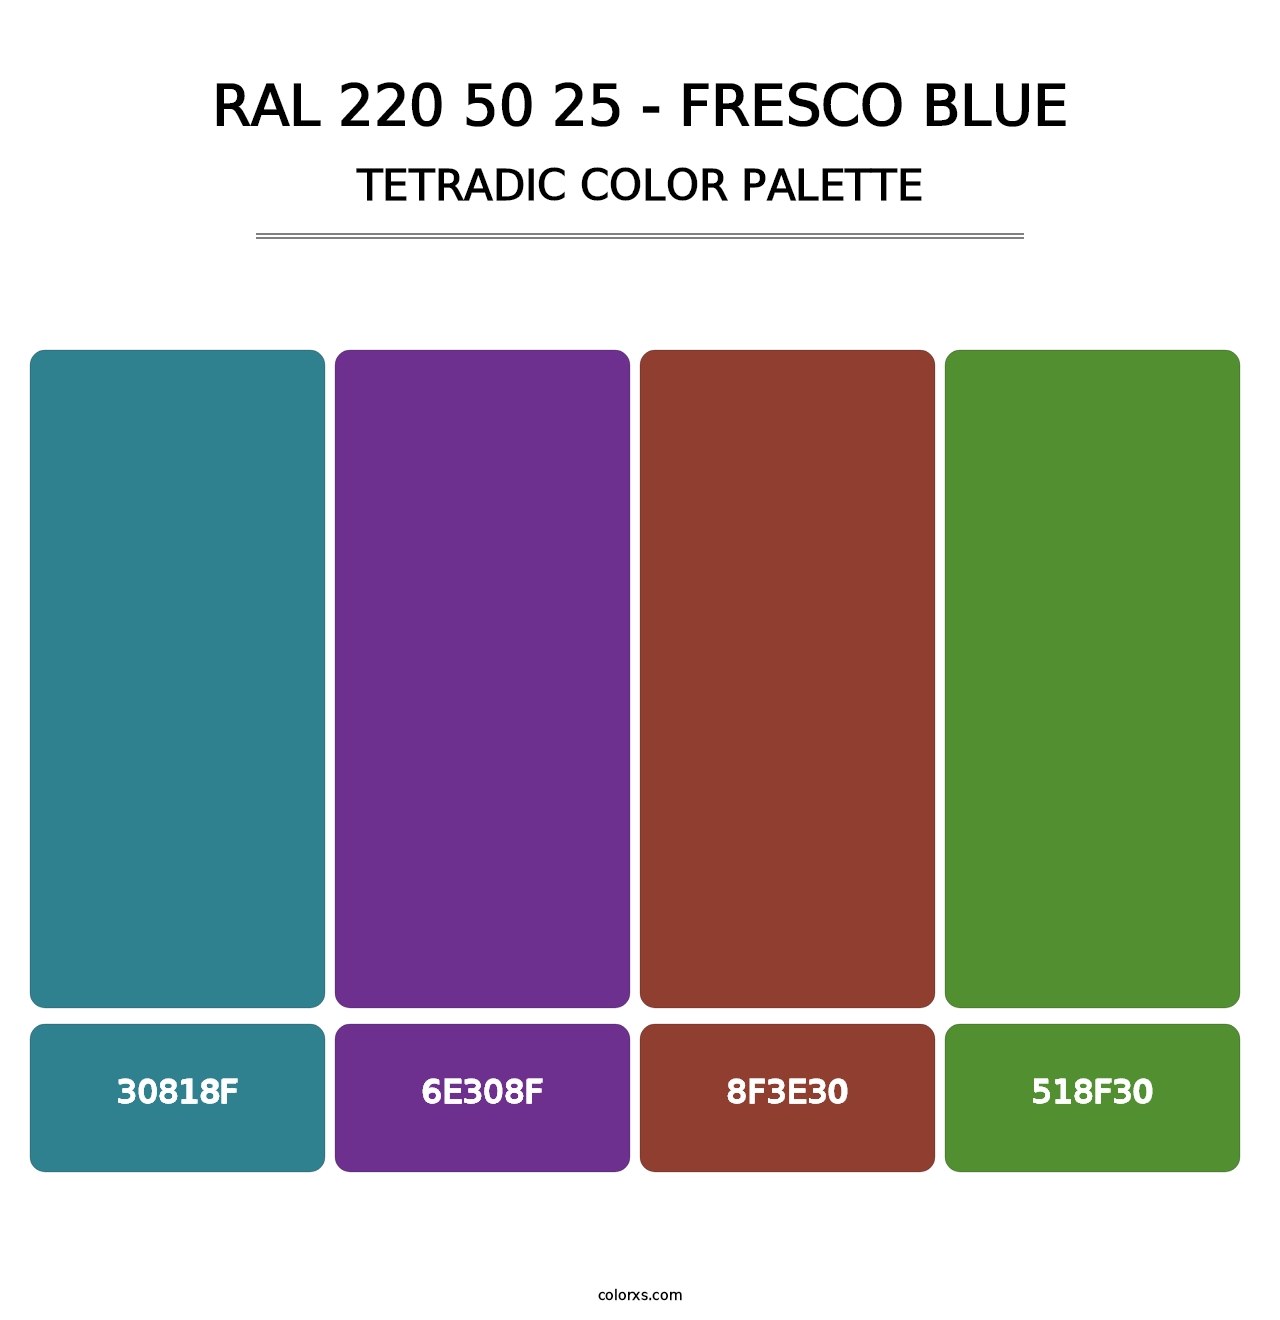 RAL 220 50 25 - Fresco Blue - Tetradic Color Palette